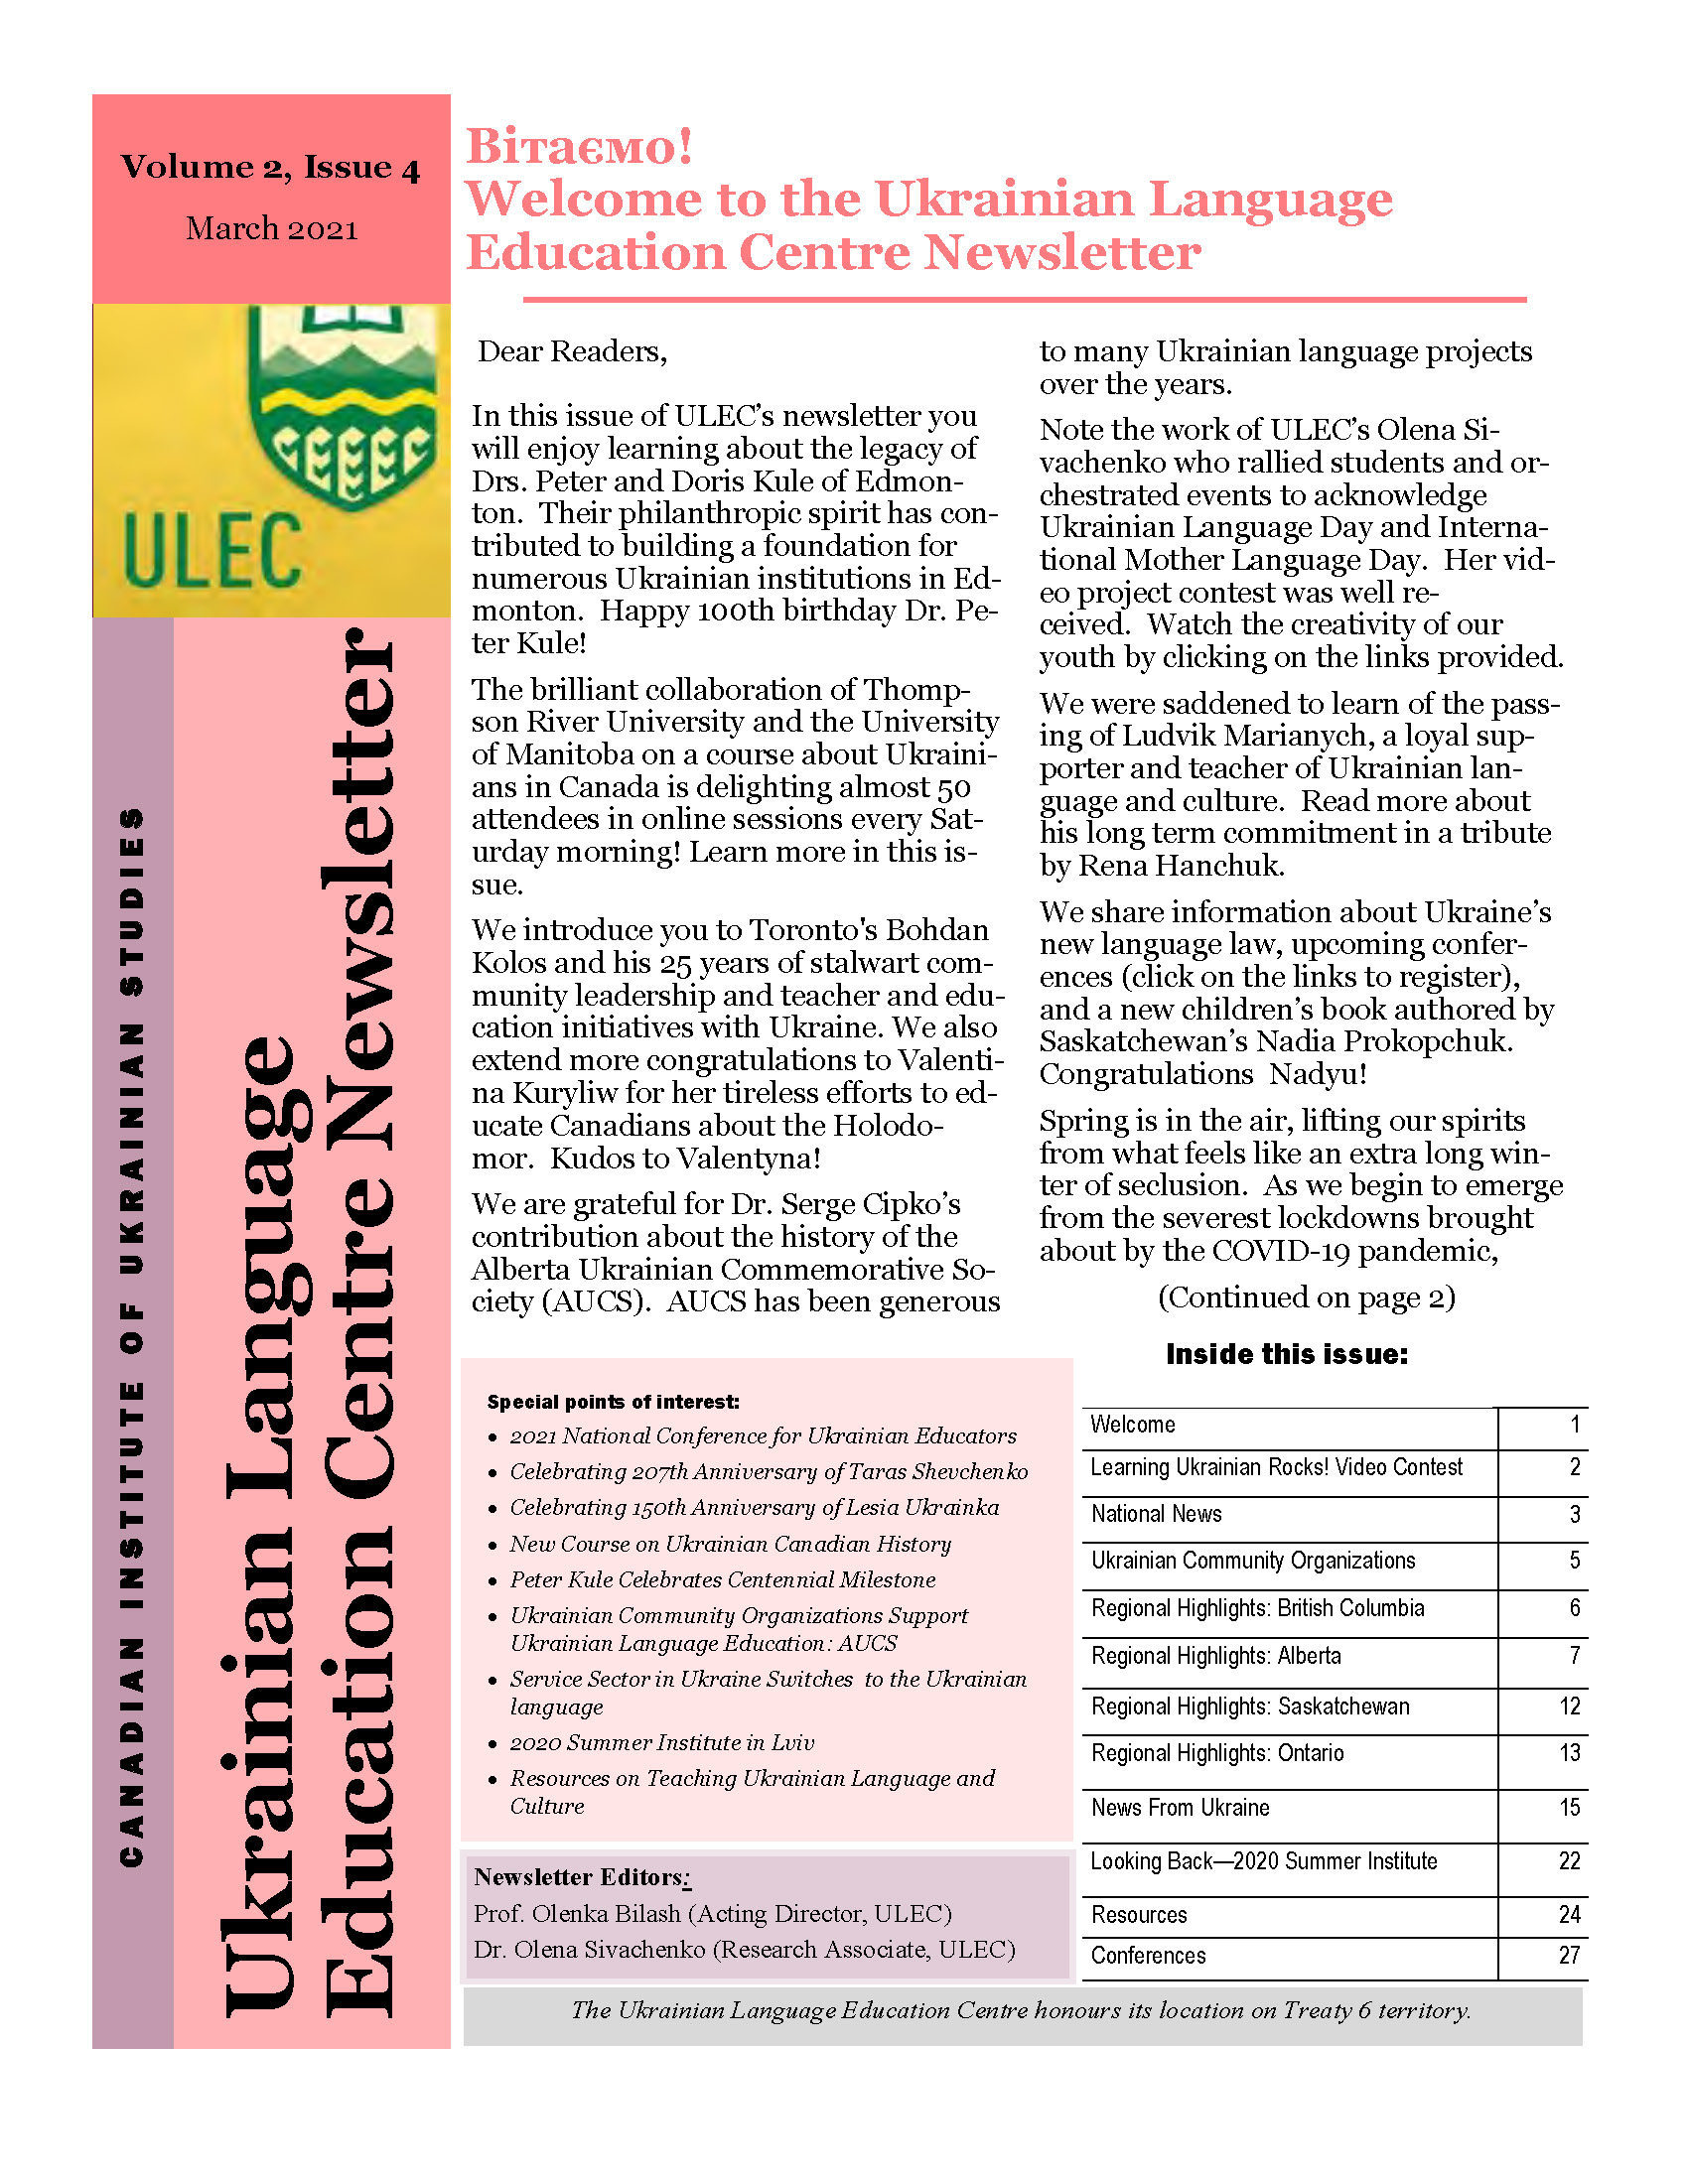 ulec-newsletter_vol.-2_issue-4_page_01.jpg